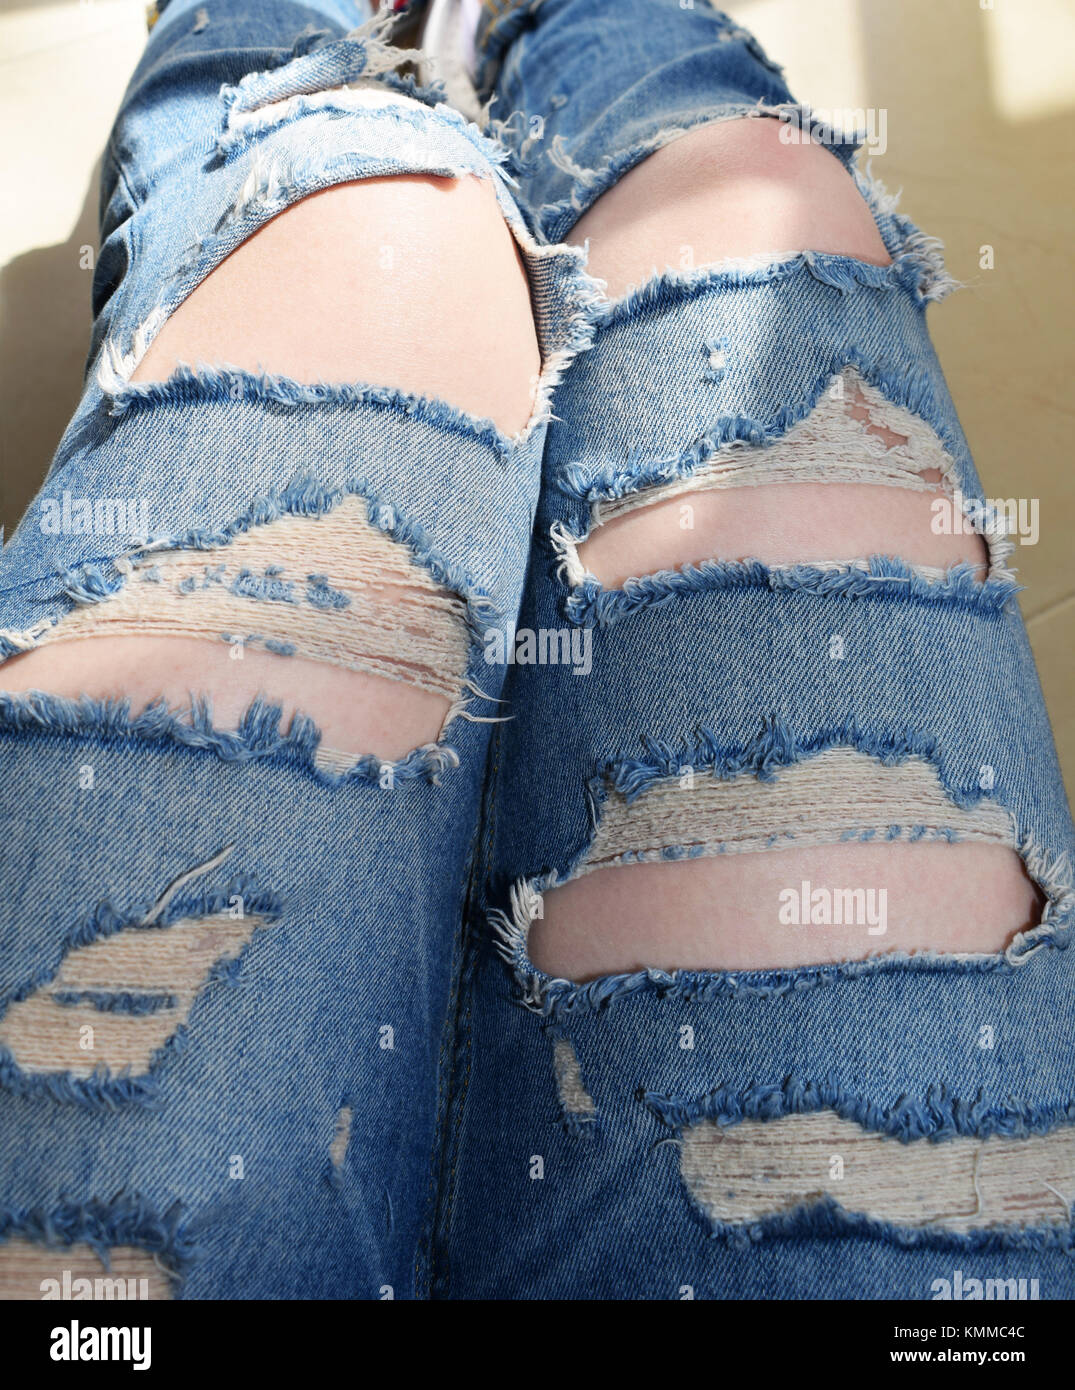 Pantalones rasgados fotografías e imágenes de alta resolución - Alamy